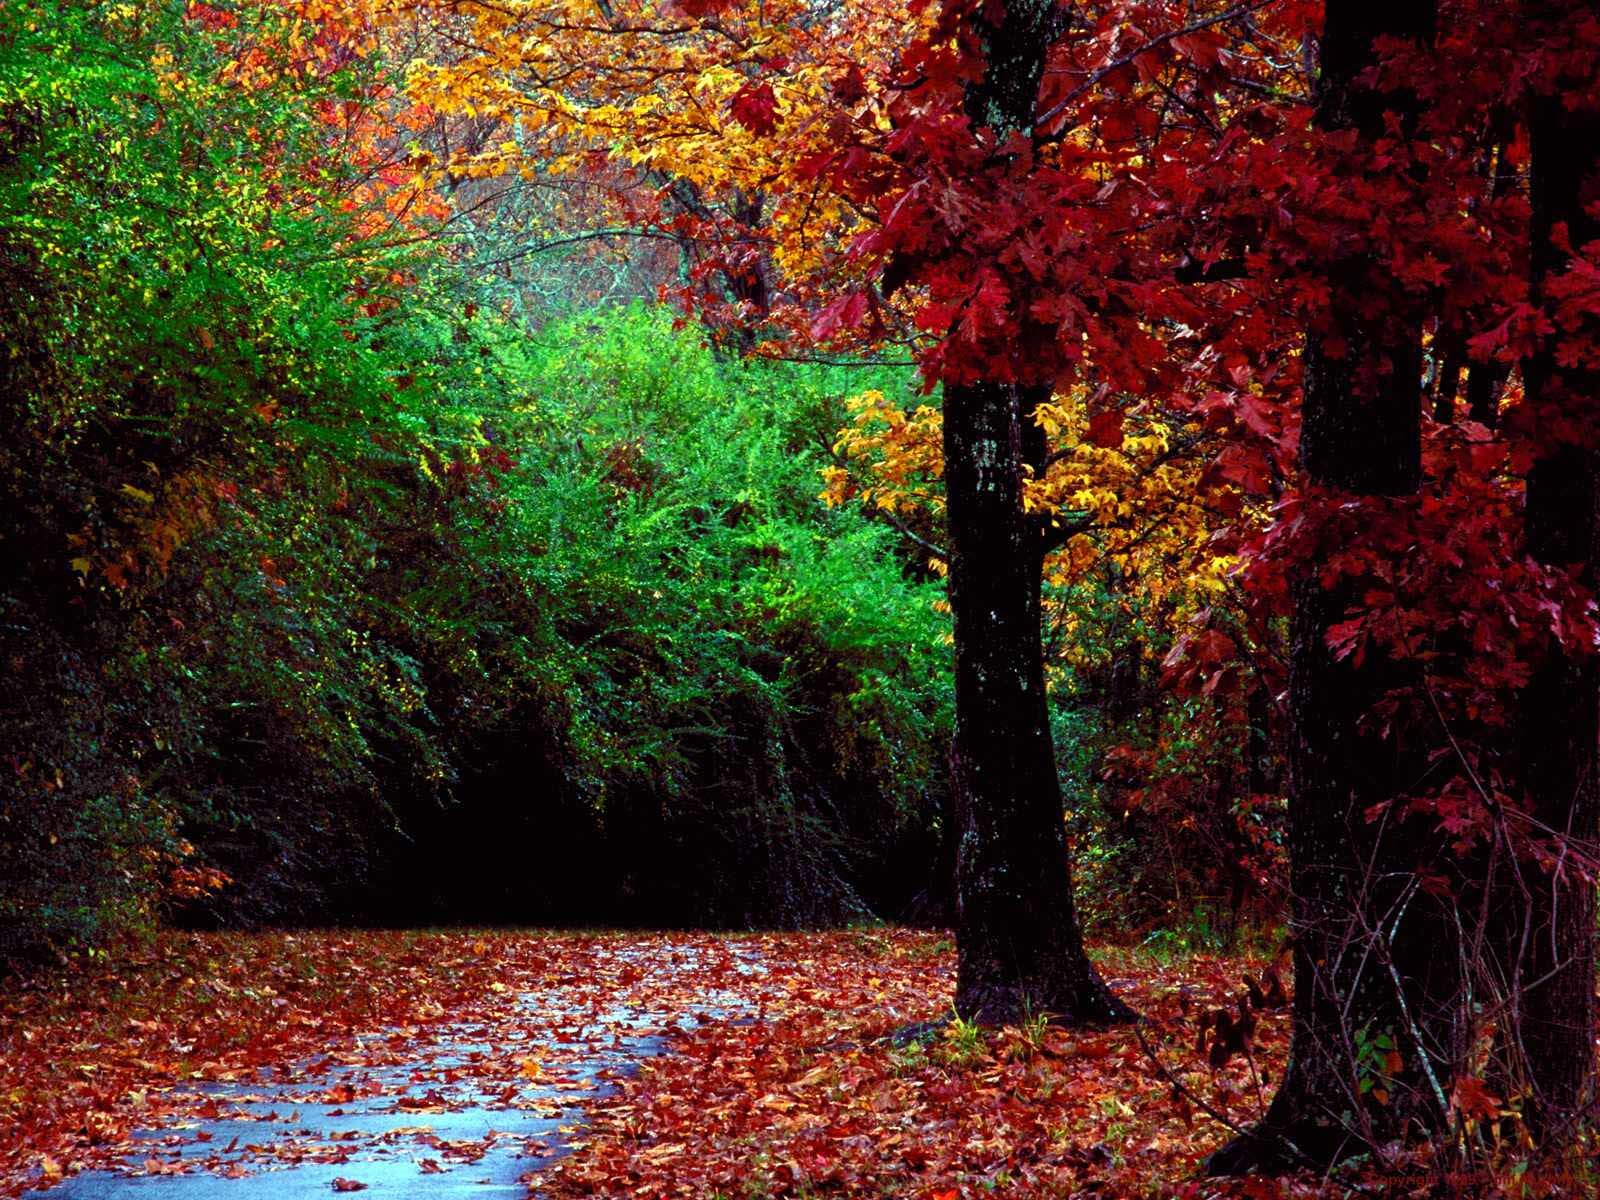 Autumn Forest Wallpaper Stock Photos